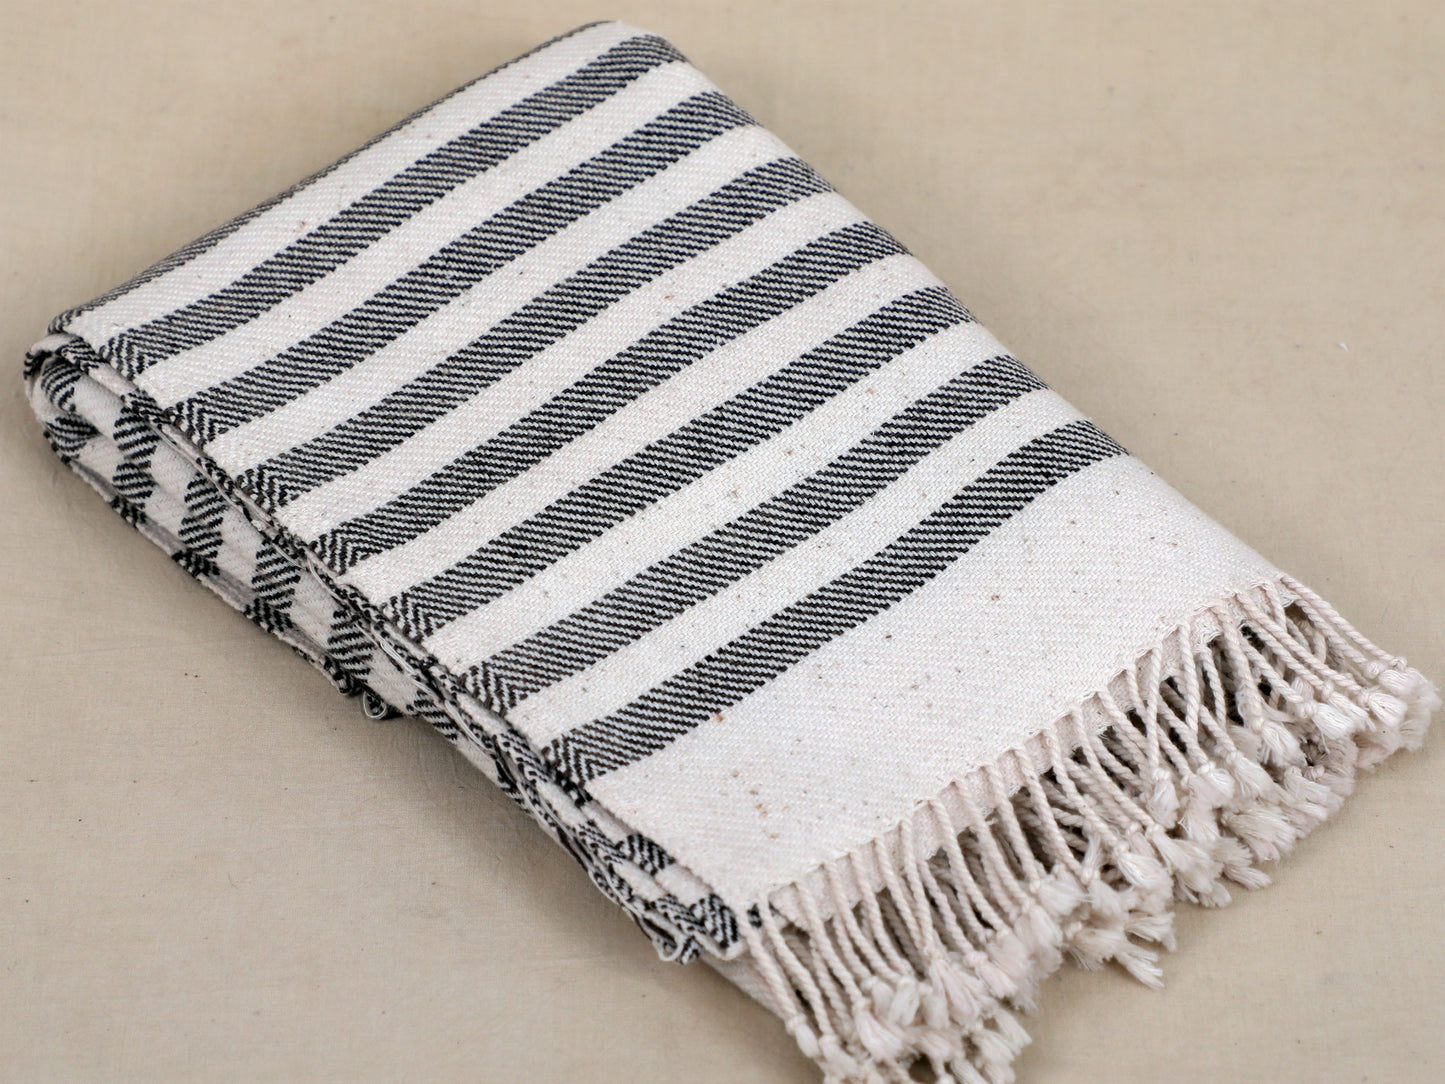 Handwoven organic cotton bath towel in grey and white color, Handmade organic cotton bath towel